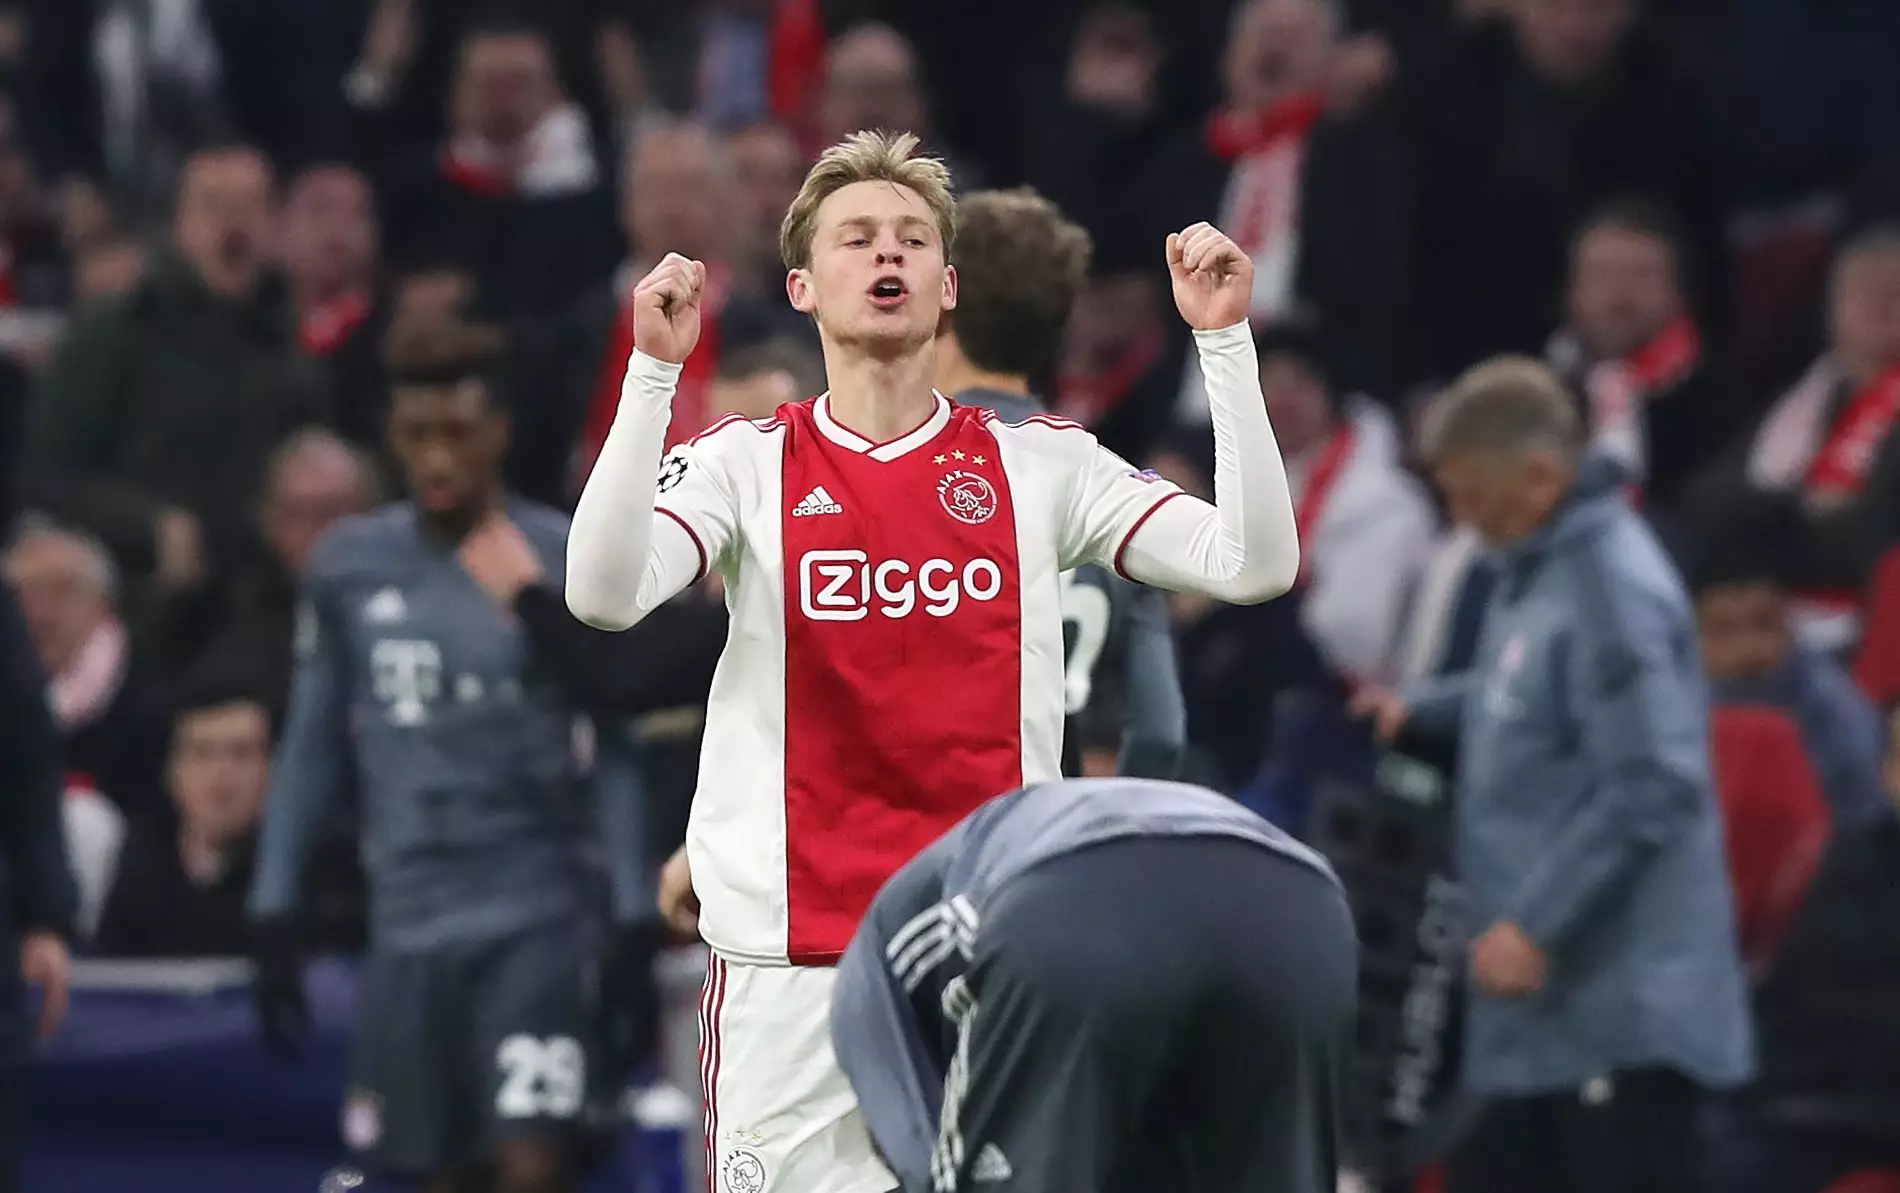 De Jong has impressed for Ajax. Image: PA Images